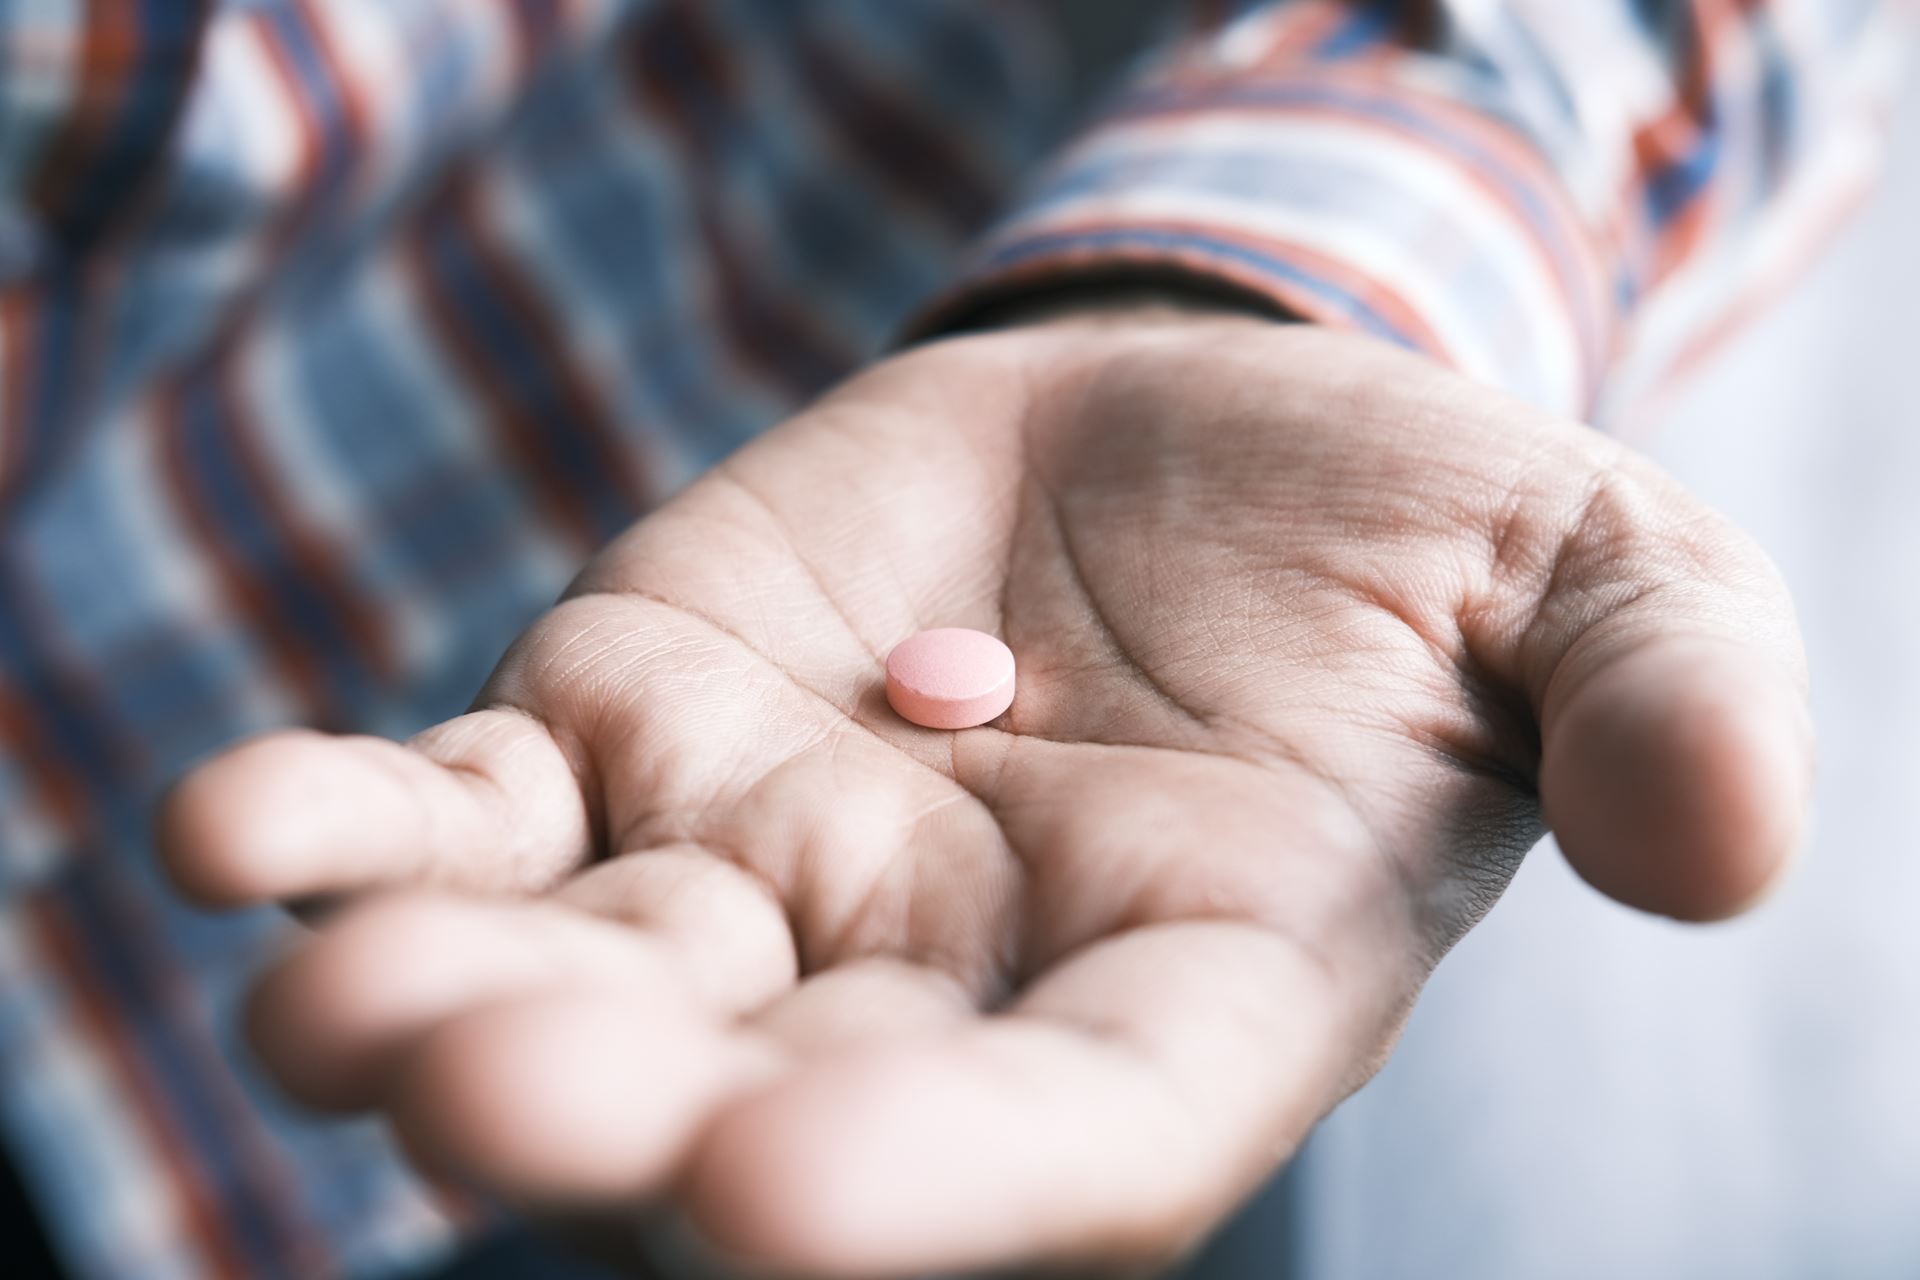 hand holding a pill